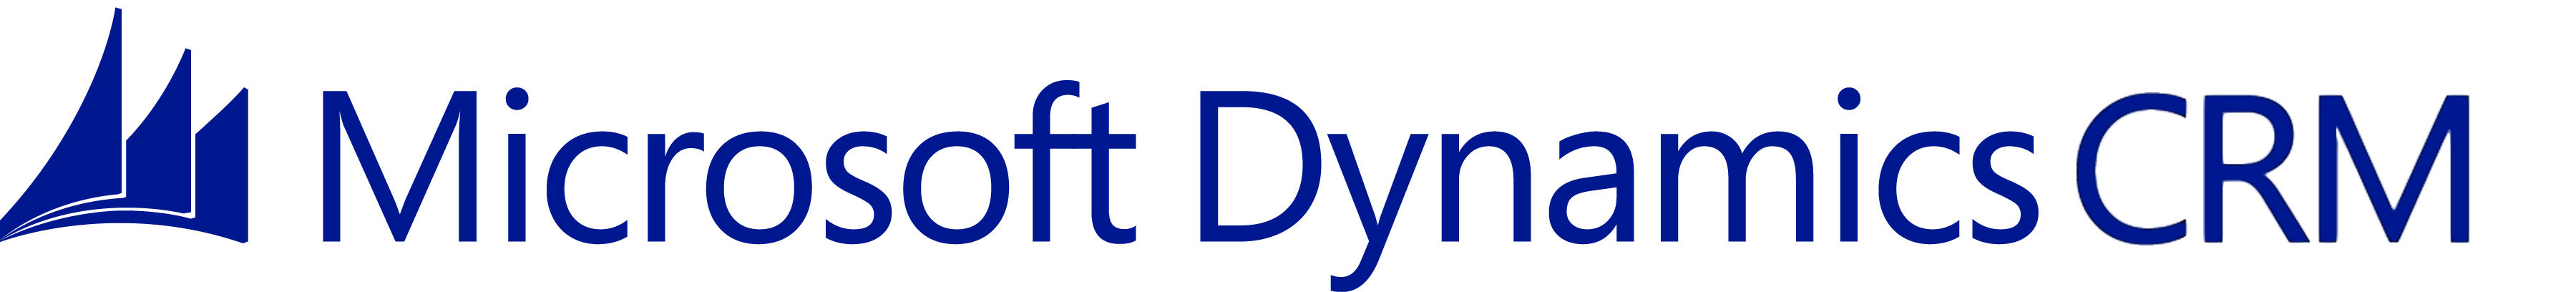 Microsoft Dynamics CRM 2013 Logo - Microsoft dynamics Logos